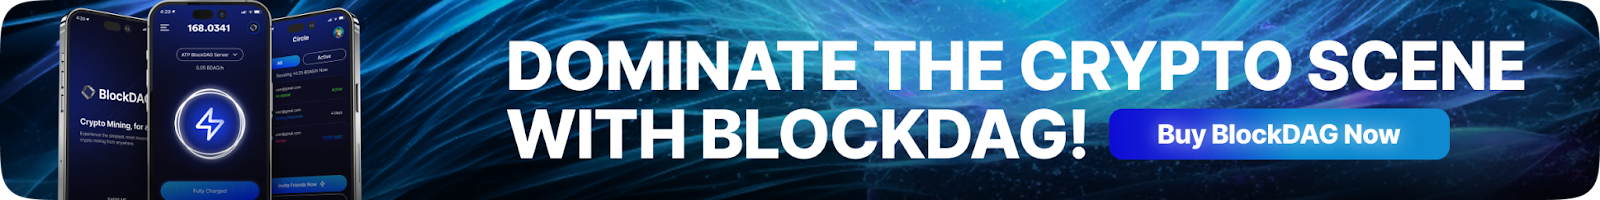 Discover BlockDAG Ecosystem’s Might in BlockDAG’s Latest Ad; Plus Polygon and Ethereum Price Updates 